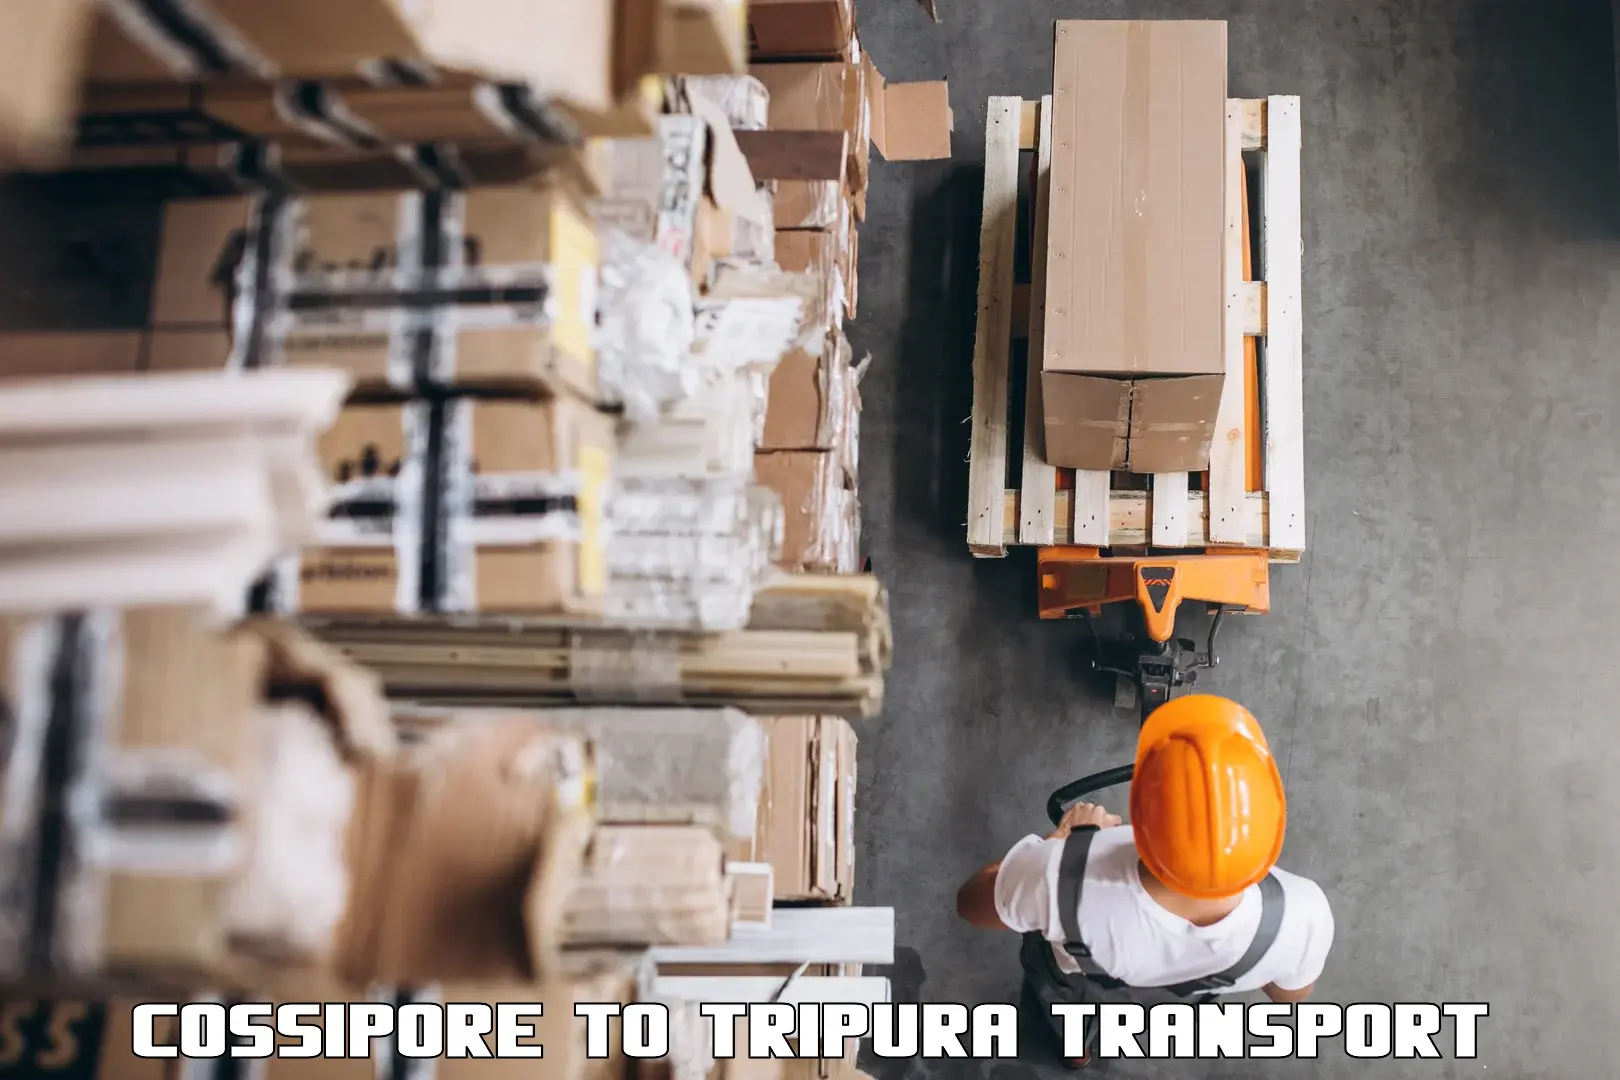 Furniture transport service Cossipore to Tripura